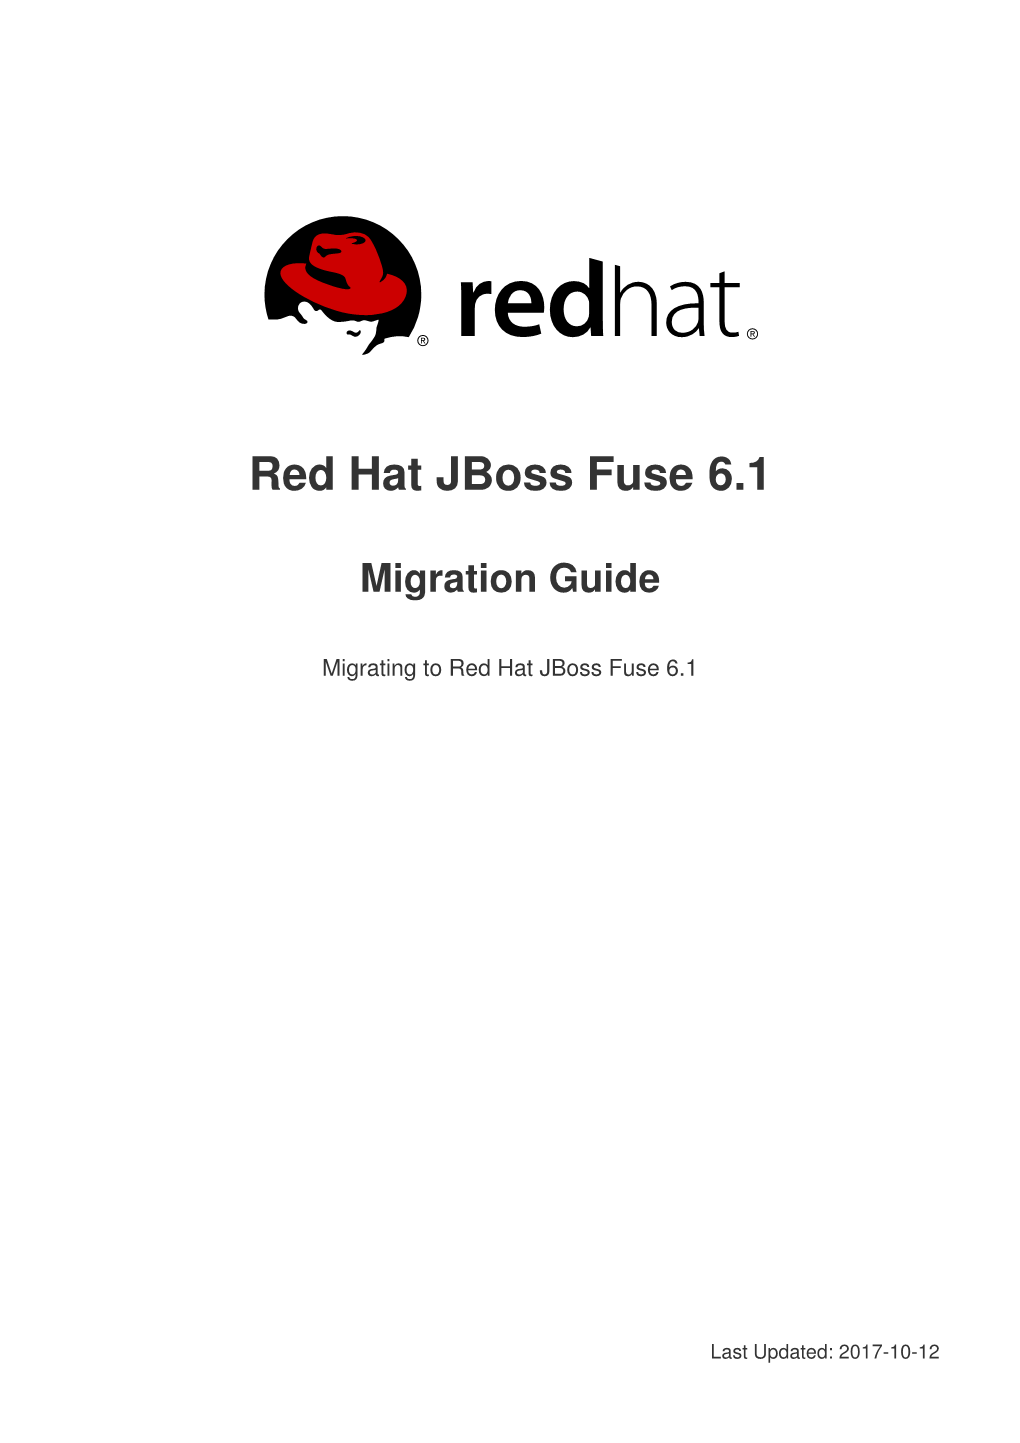 Red Hat Jboss Fuse 6.1 Migration Guide